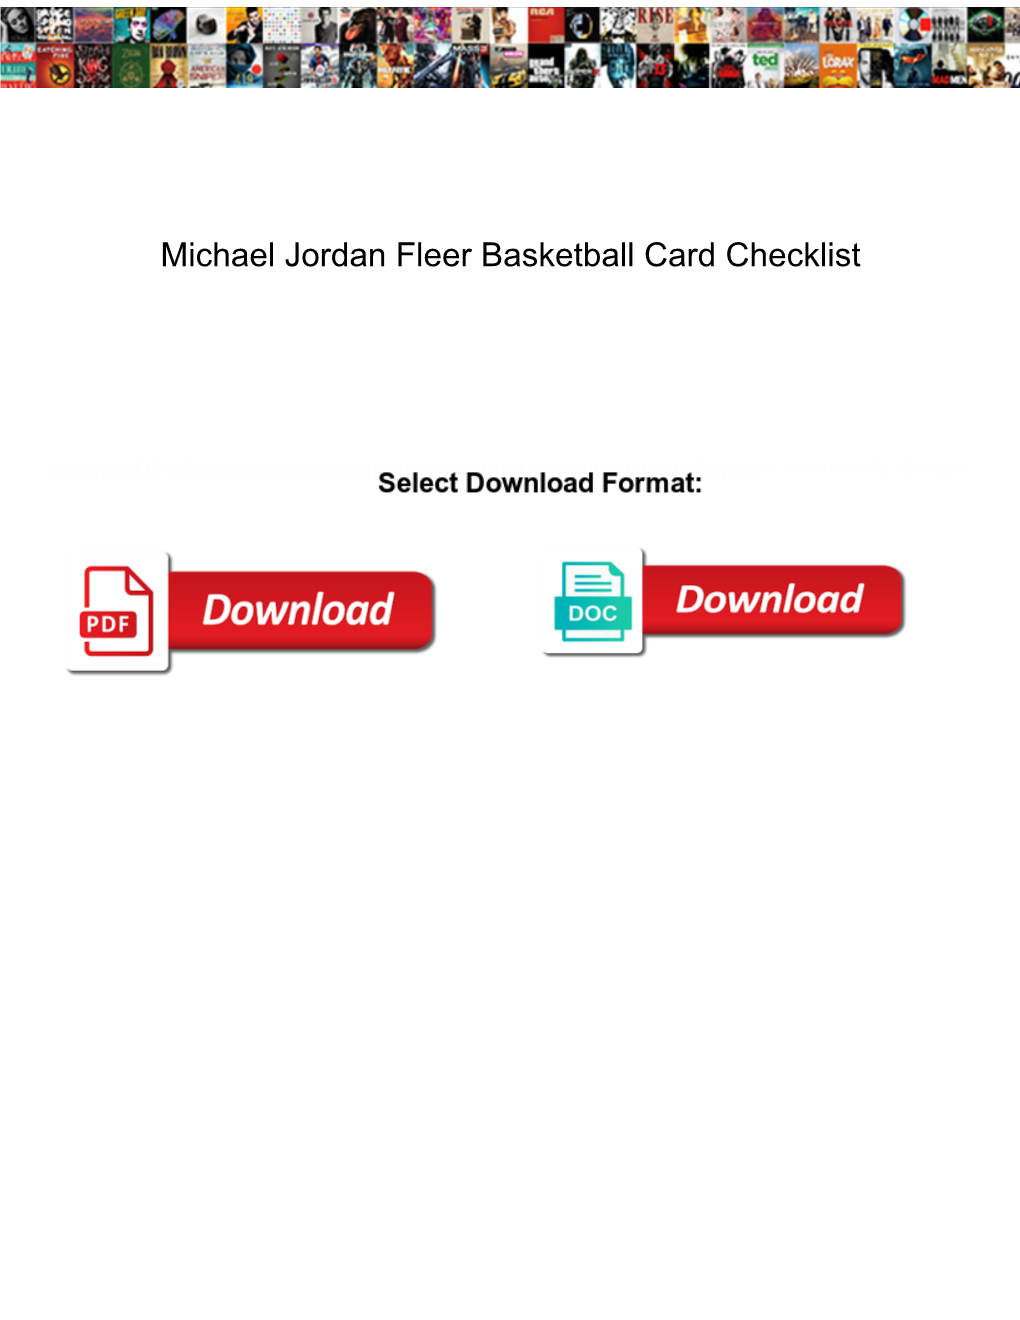 Michael Jordan Fleer Basketball Card Checklist